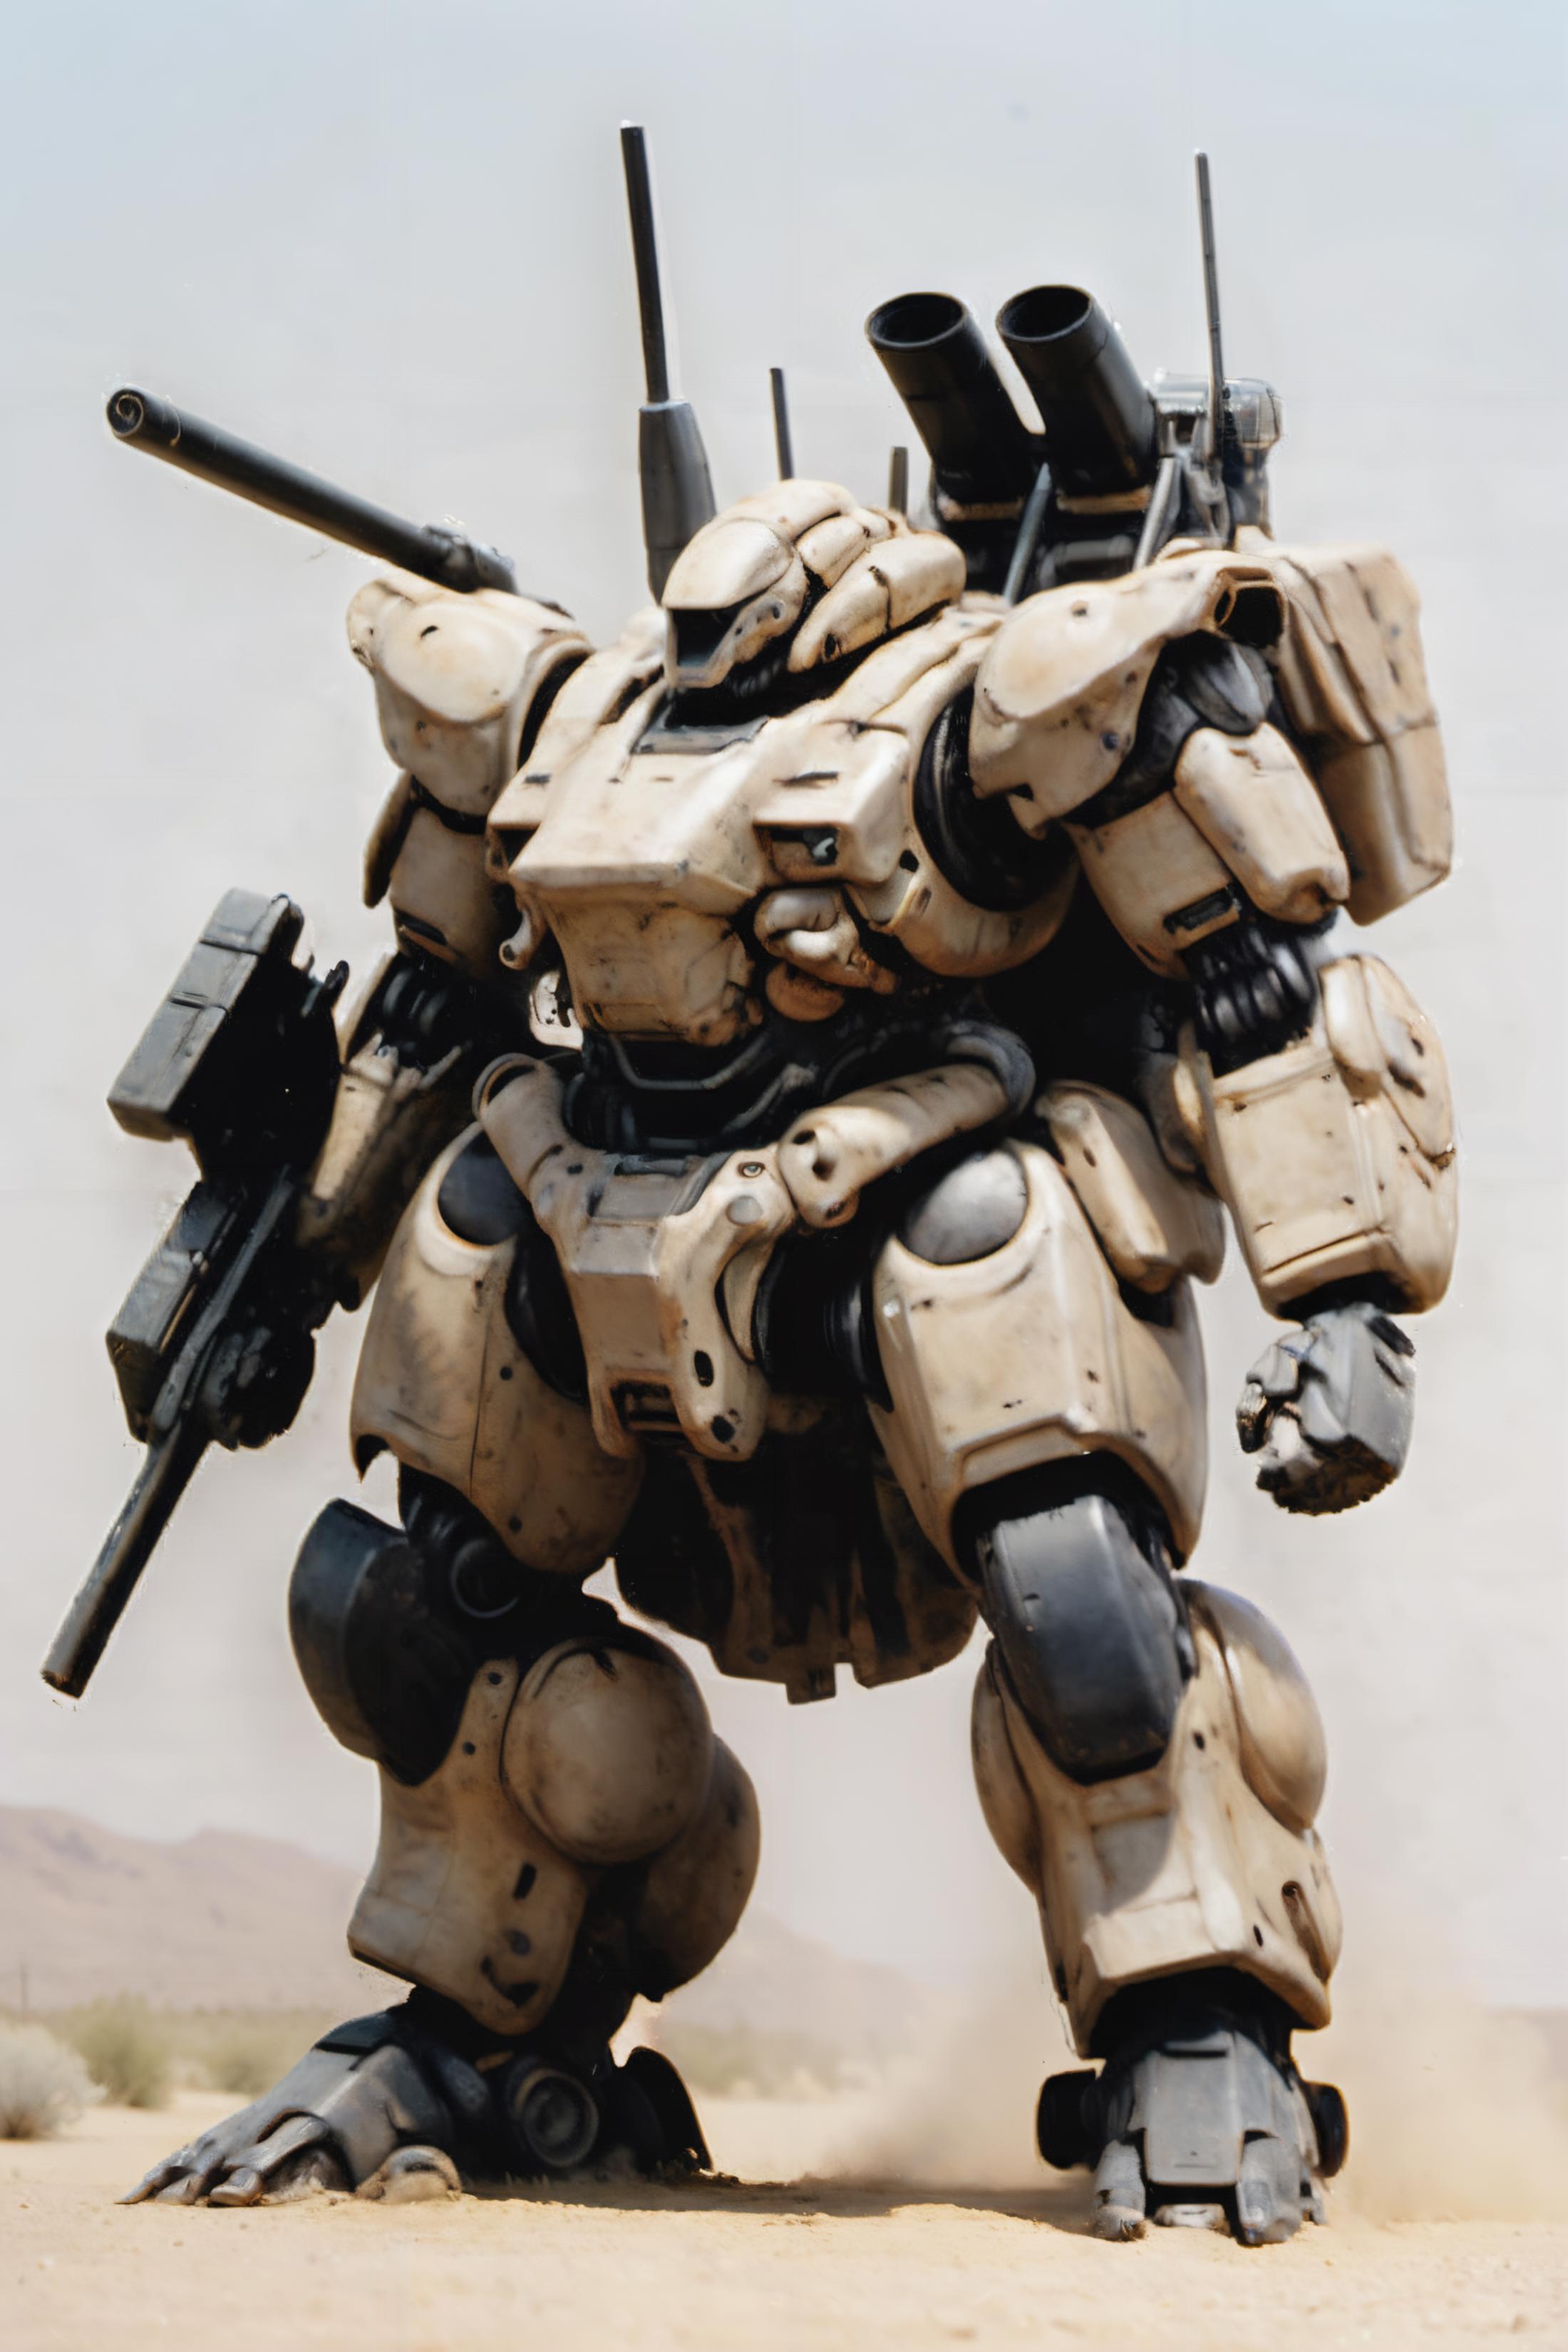 Super robot diffusion XL (Gundam, EVA, ARMORED CORE, BATTLE TECH like mecha lora) image by IvanOverdrive